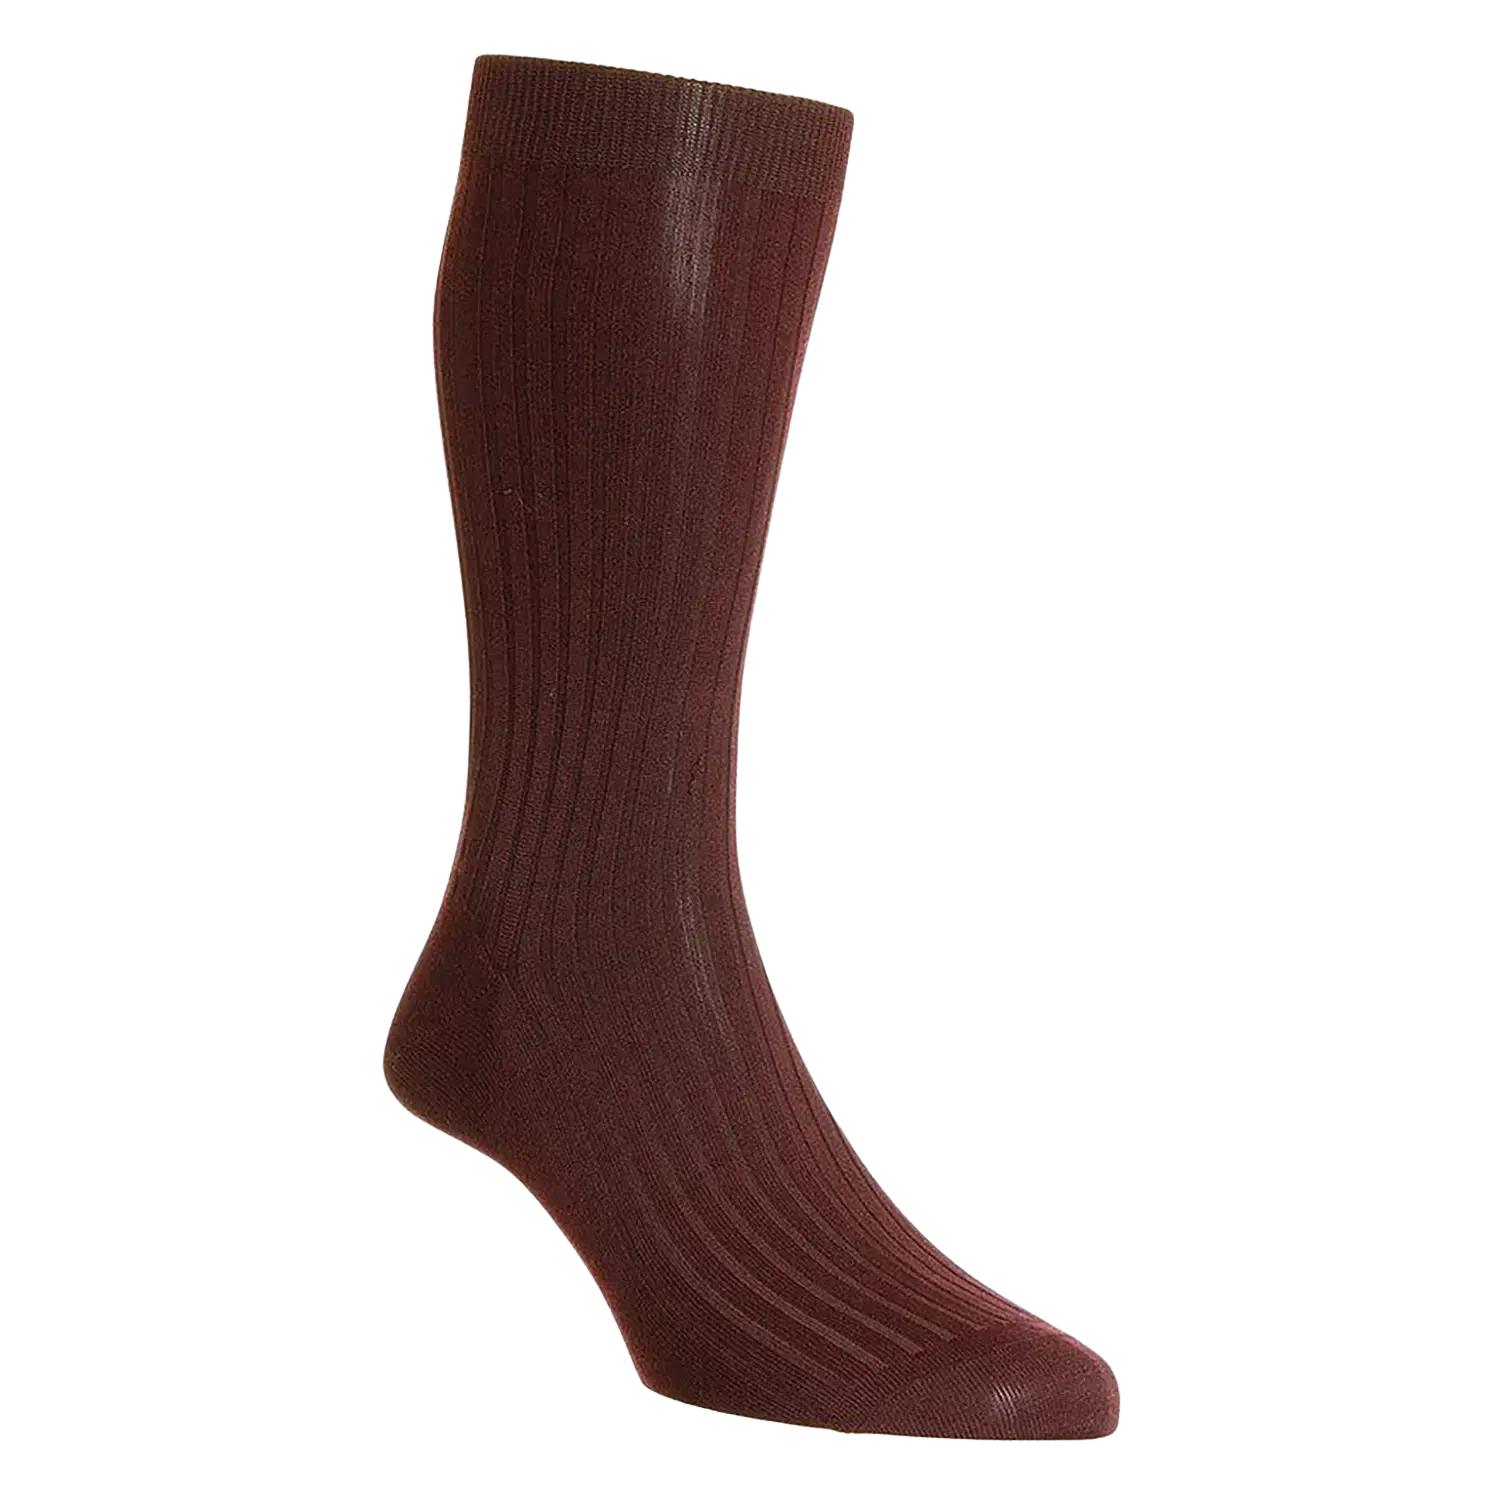 Pantherella Danvers 5614 Cotton Blend Socks for Men in Burgundy